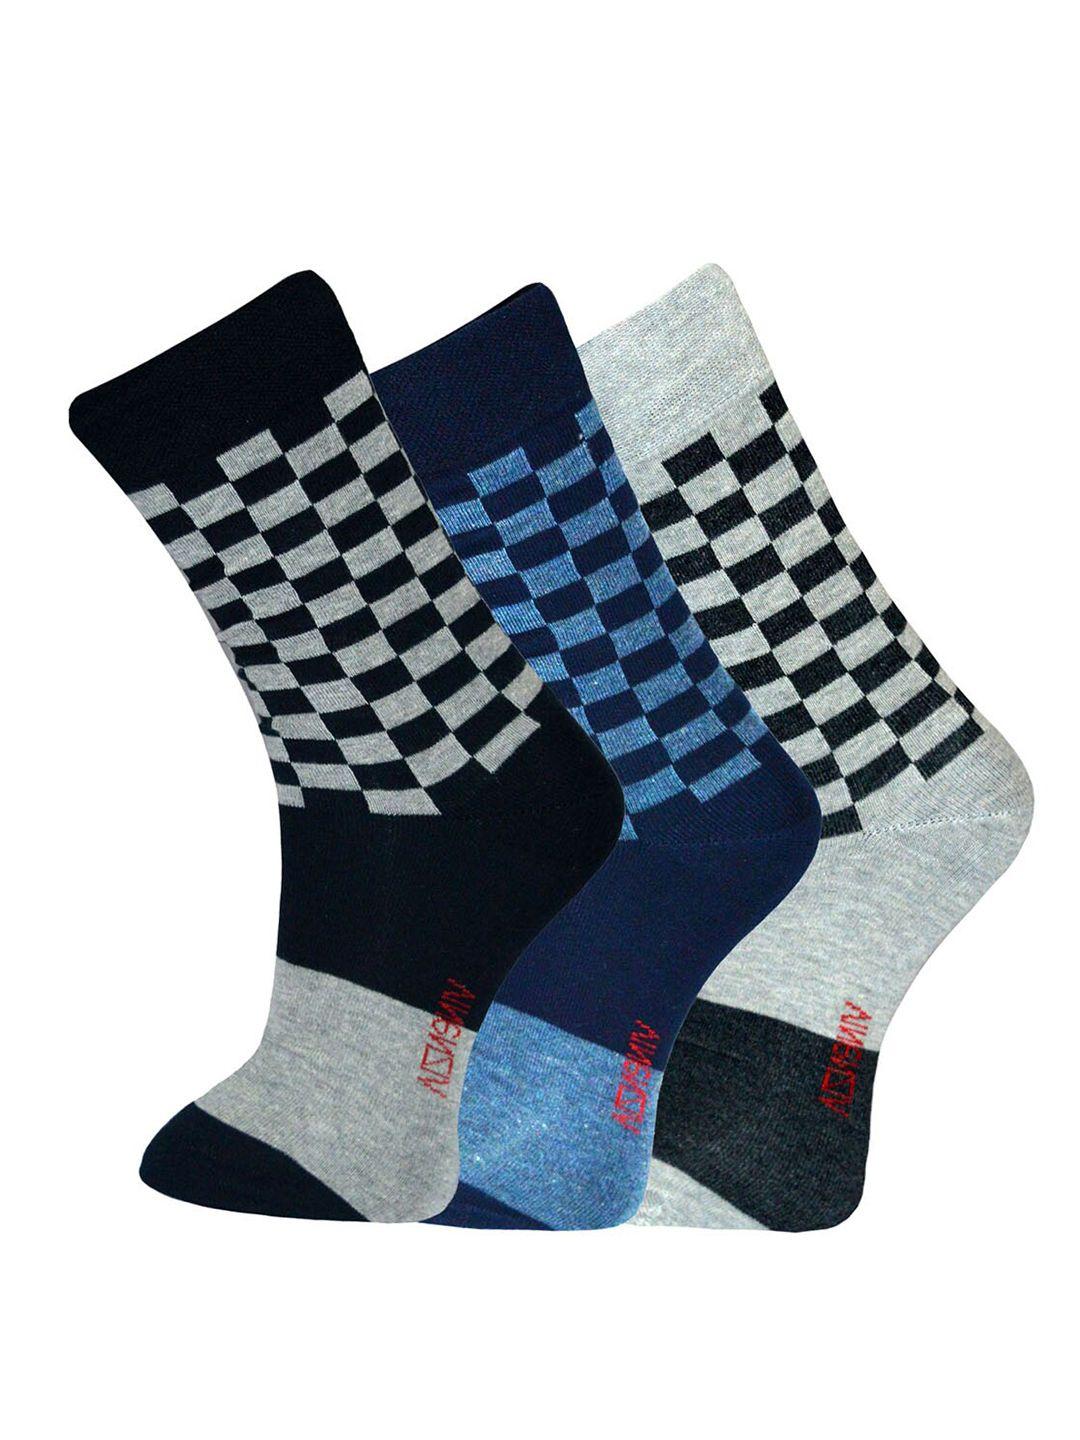 vinenzia-men-pack-of-3-assorted-calf-length-cotton-socks